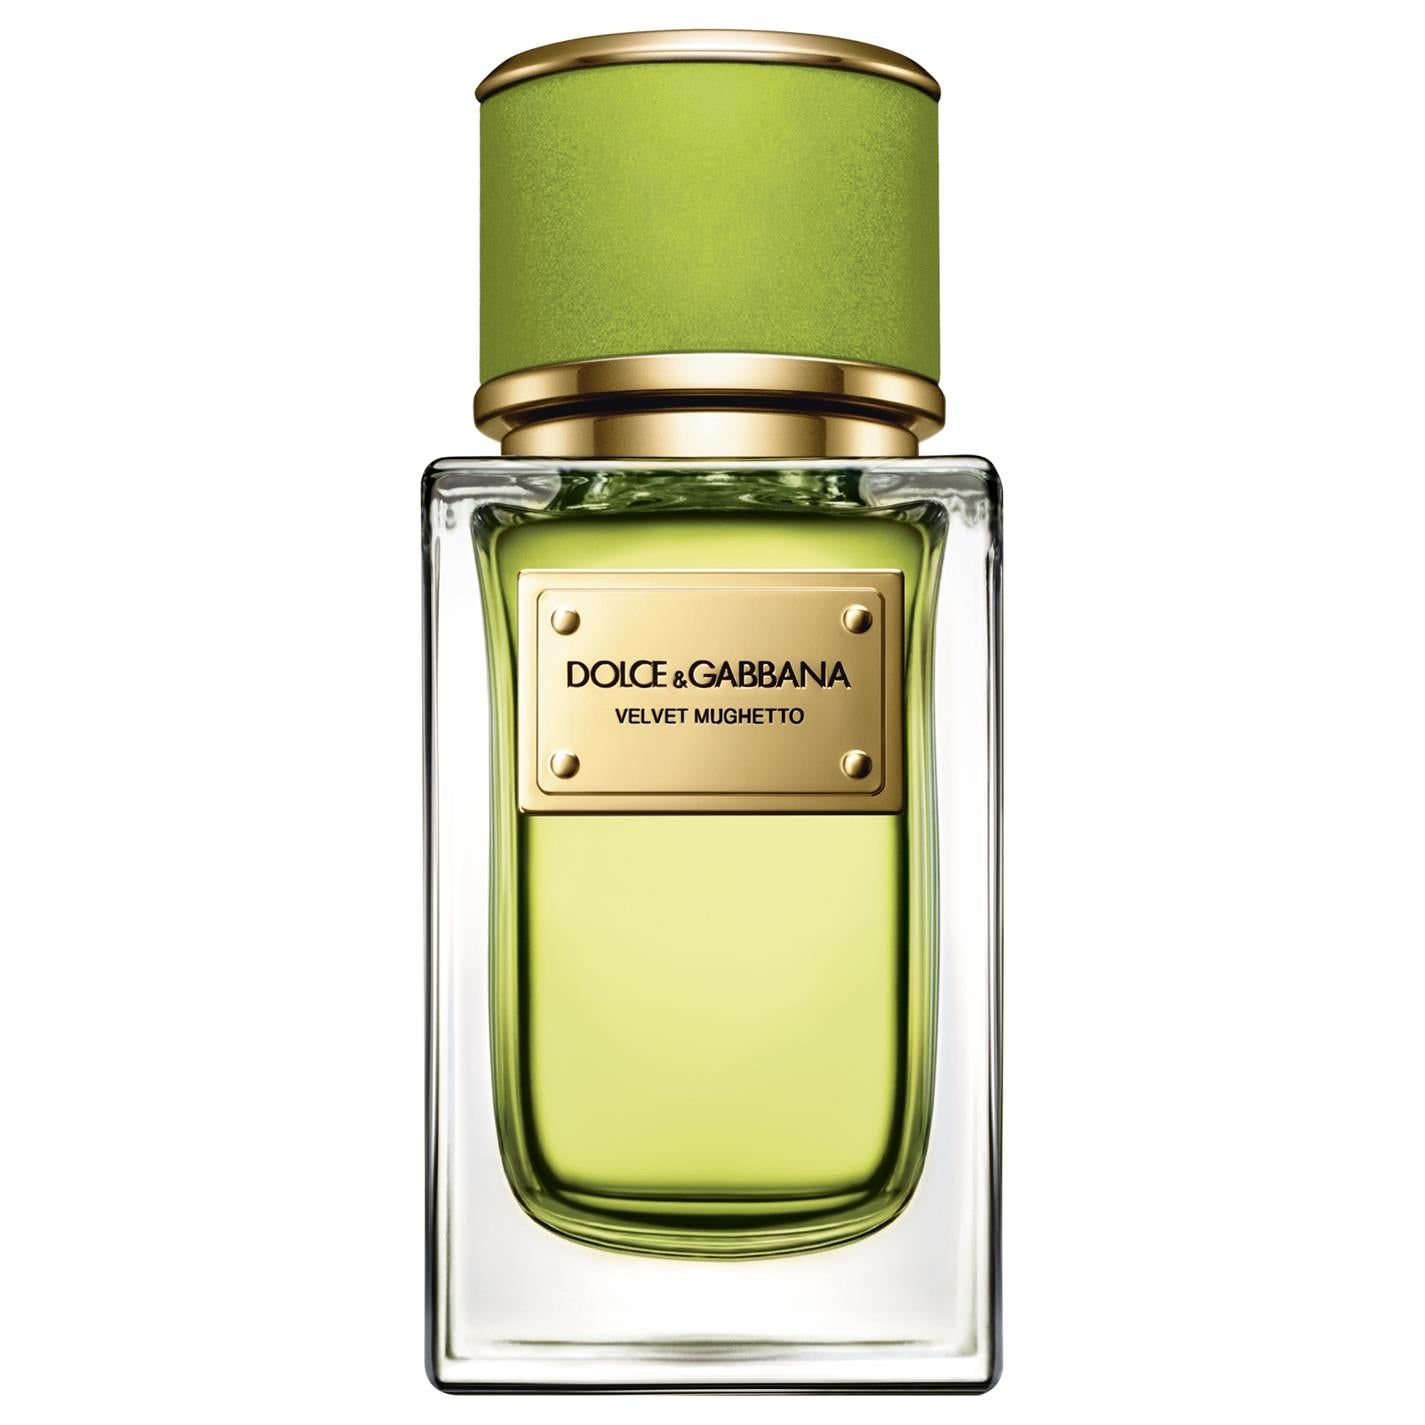 Dolce & Gabbana VELVET Mughetto 1.5 ml 0.05 fl. oz. ametlik parfüümi näidis